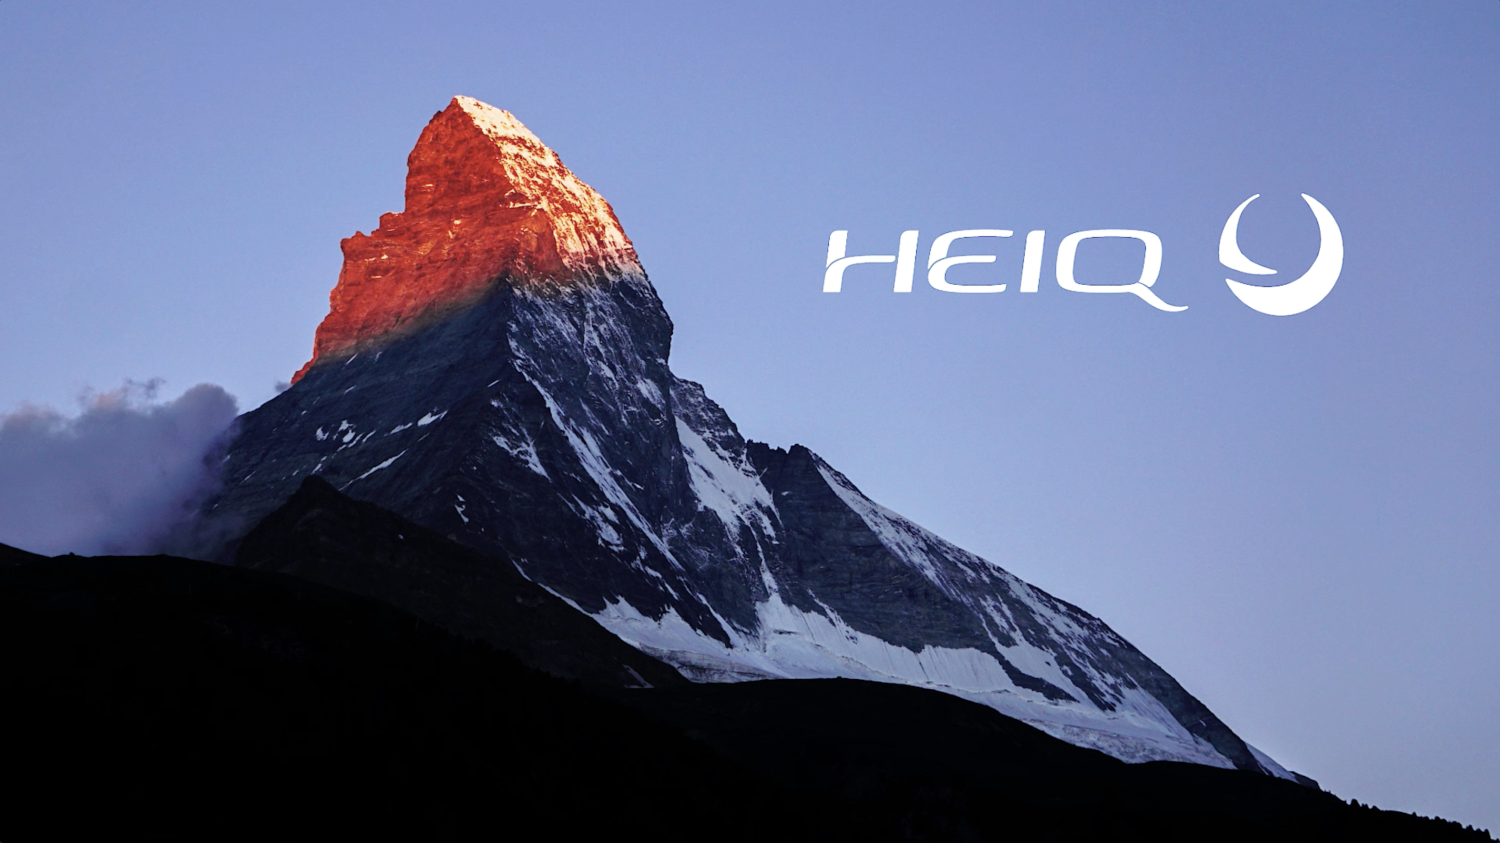 Heiq Logo And Mountain